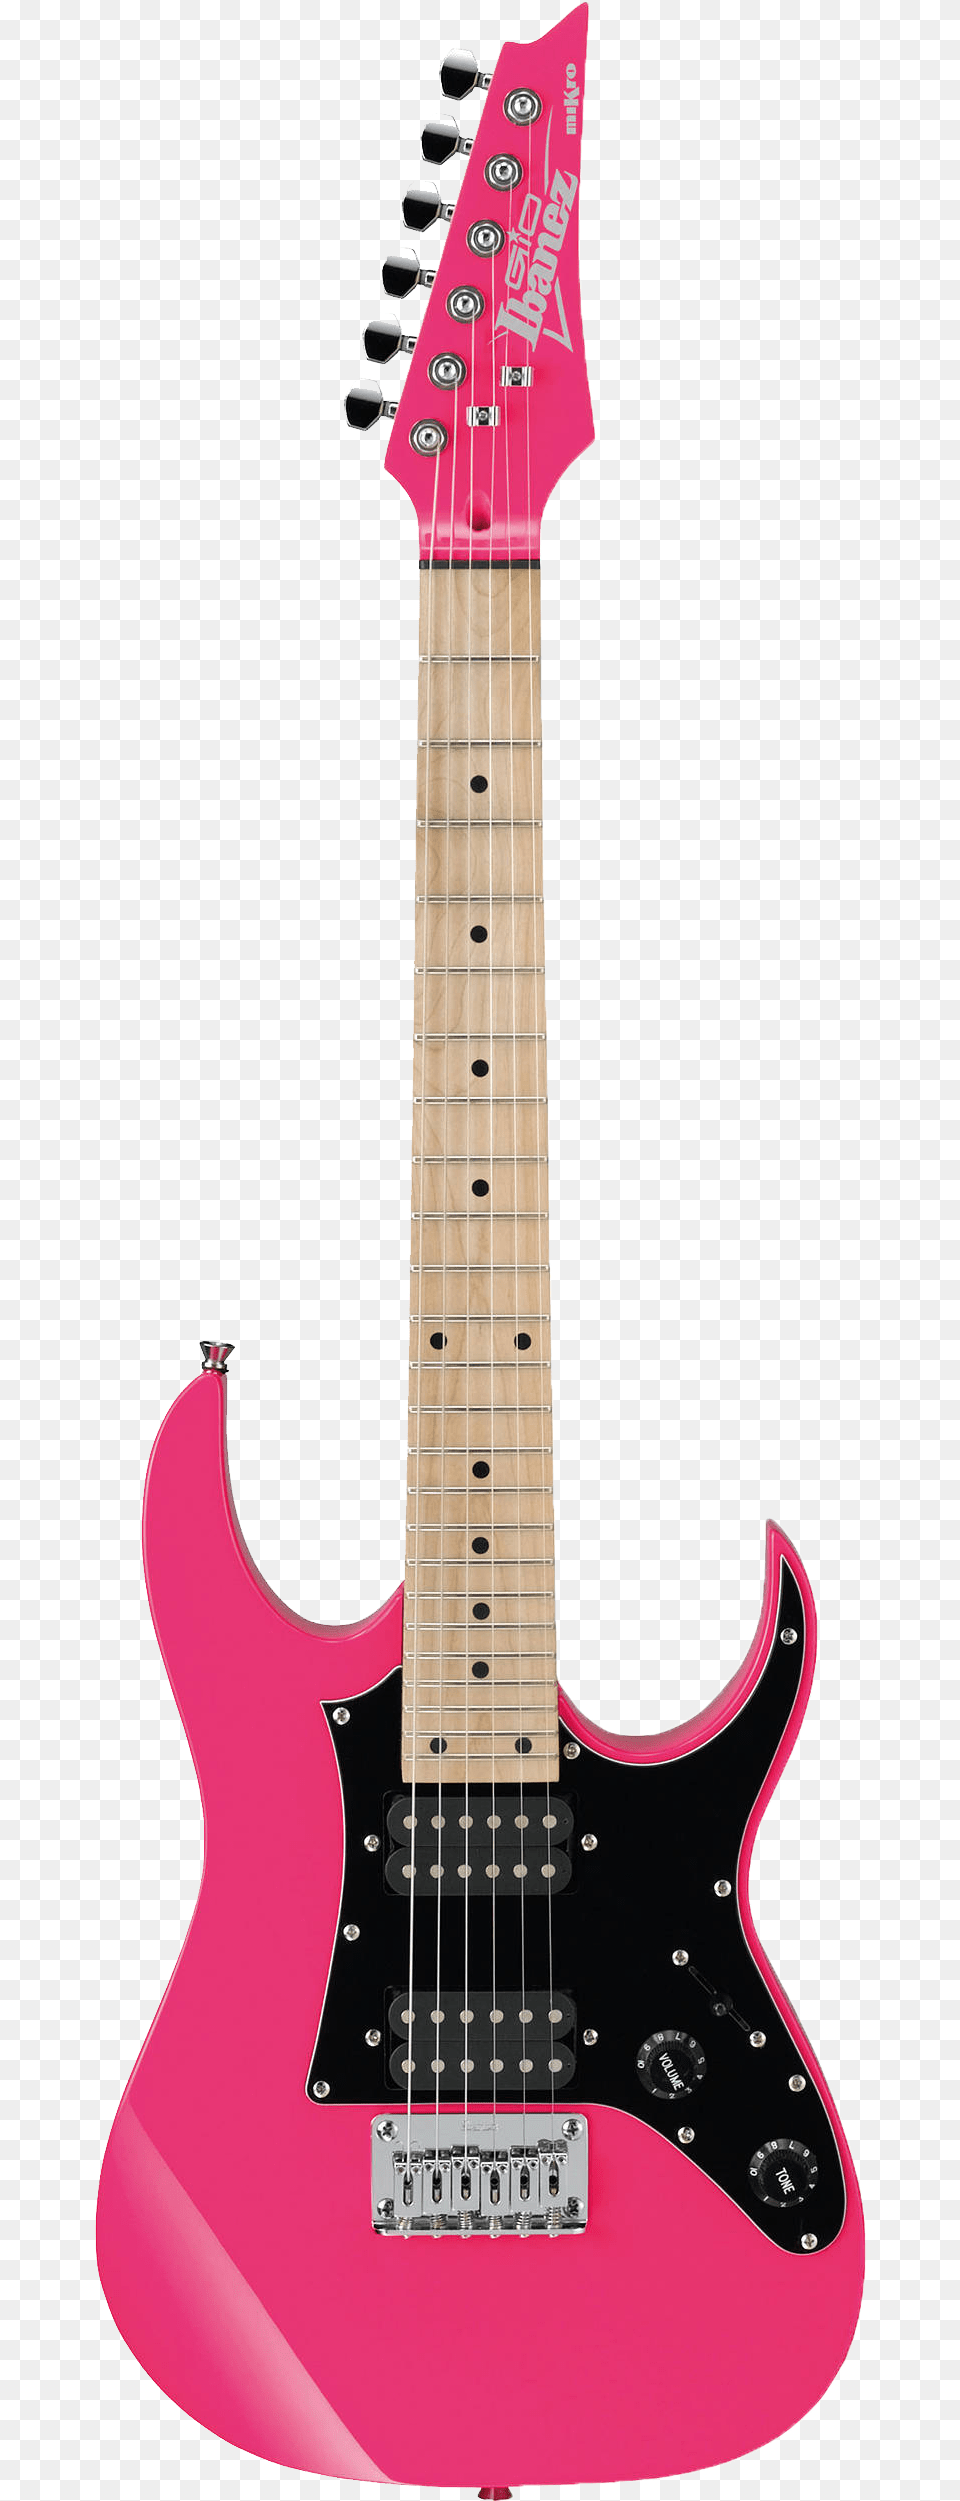 Electric Guitar Photo Pink Electric 3 4 Guitar, Electric Guitar, Musical Instrument, Bass Guitar Png Image